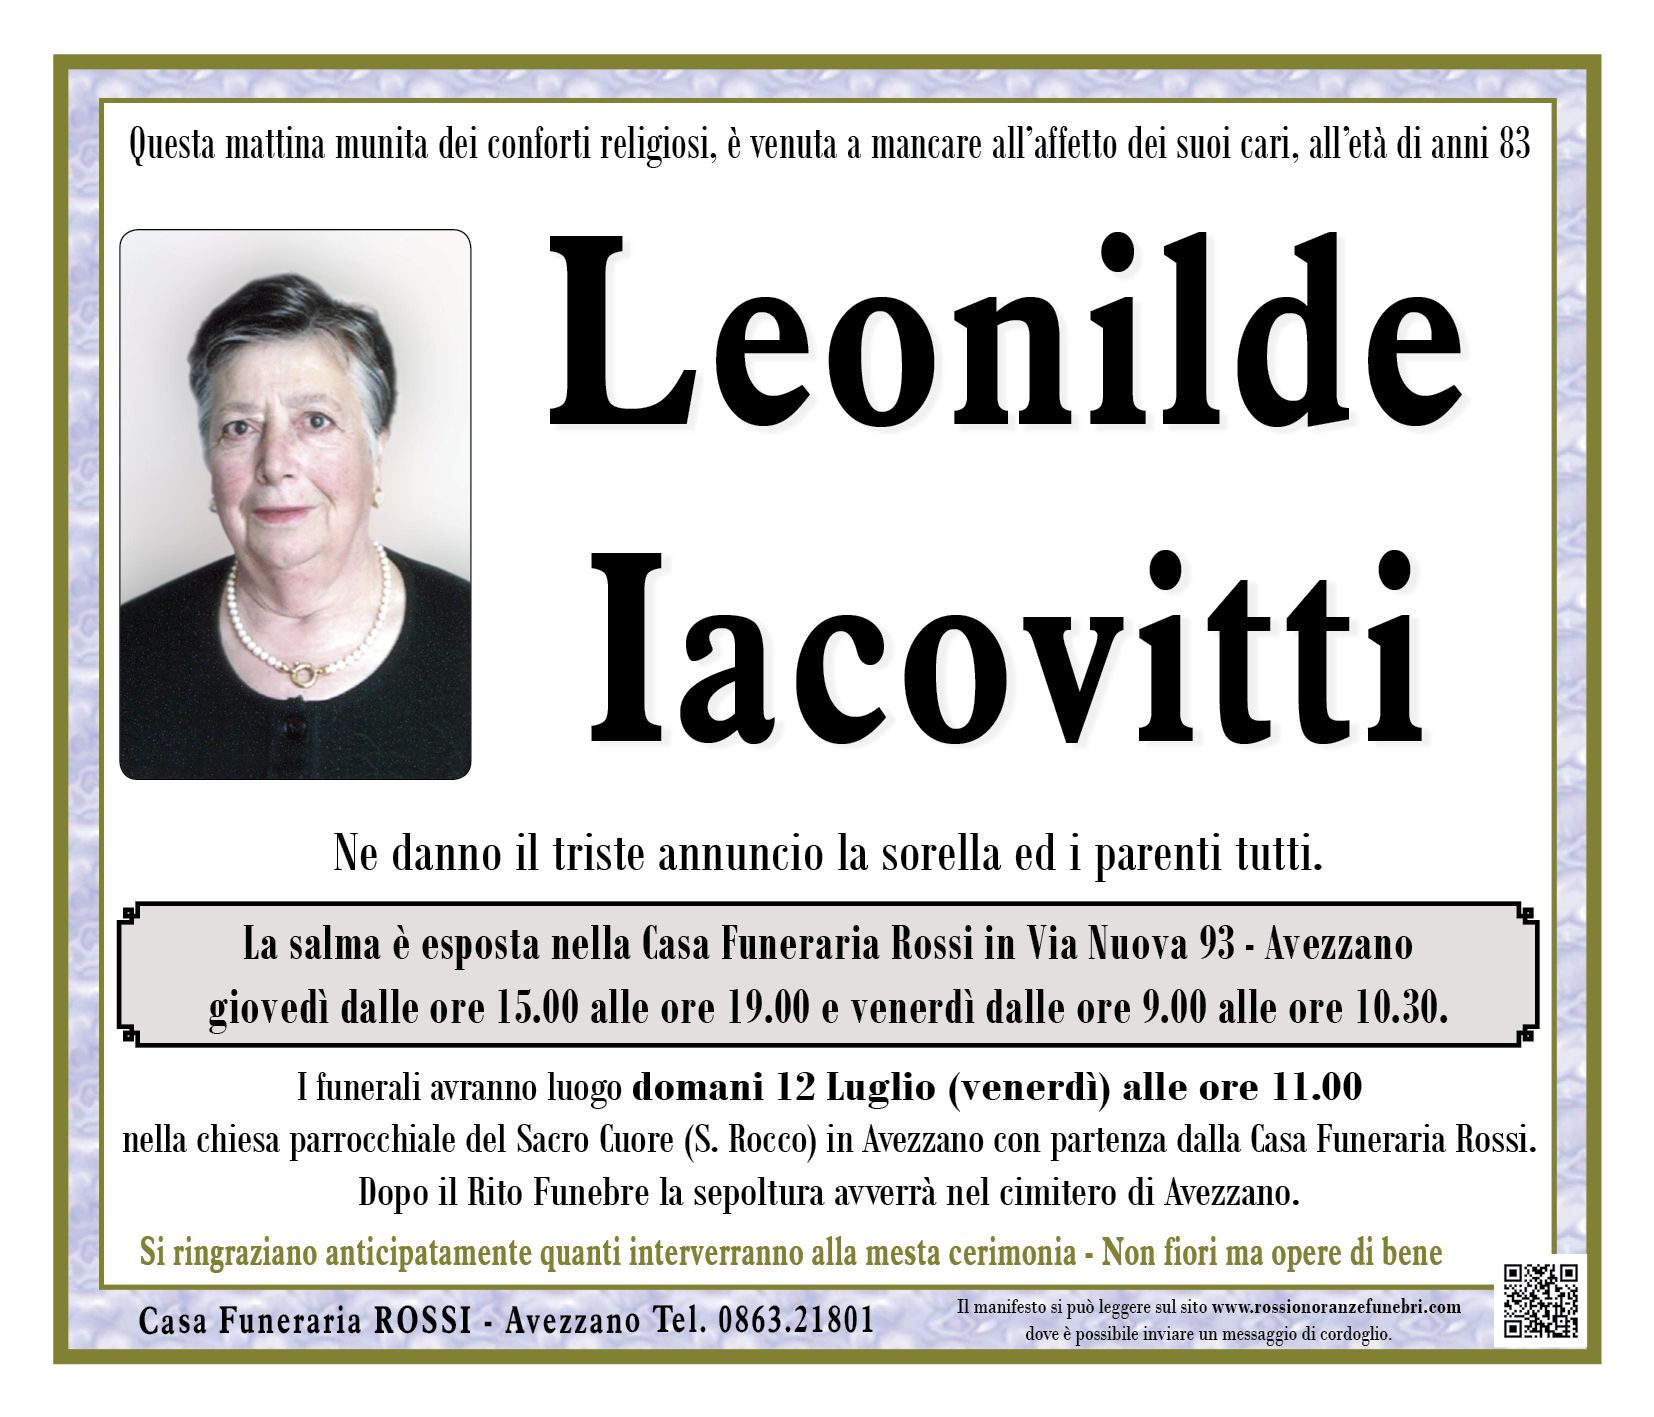 Leonilde Iacovitti